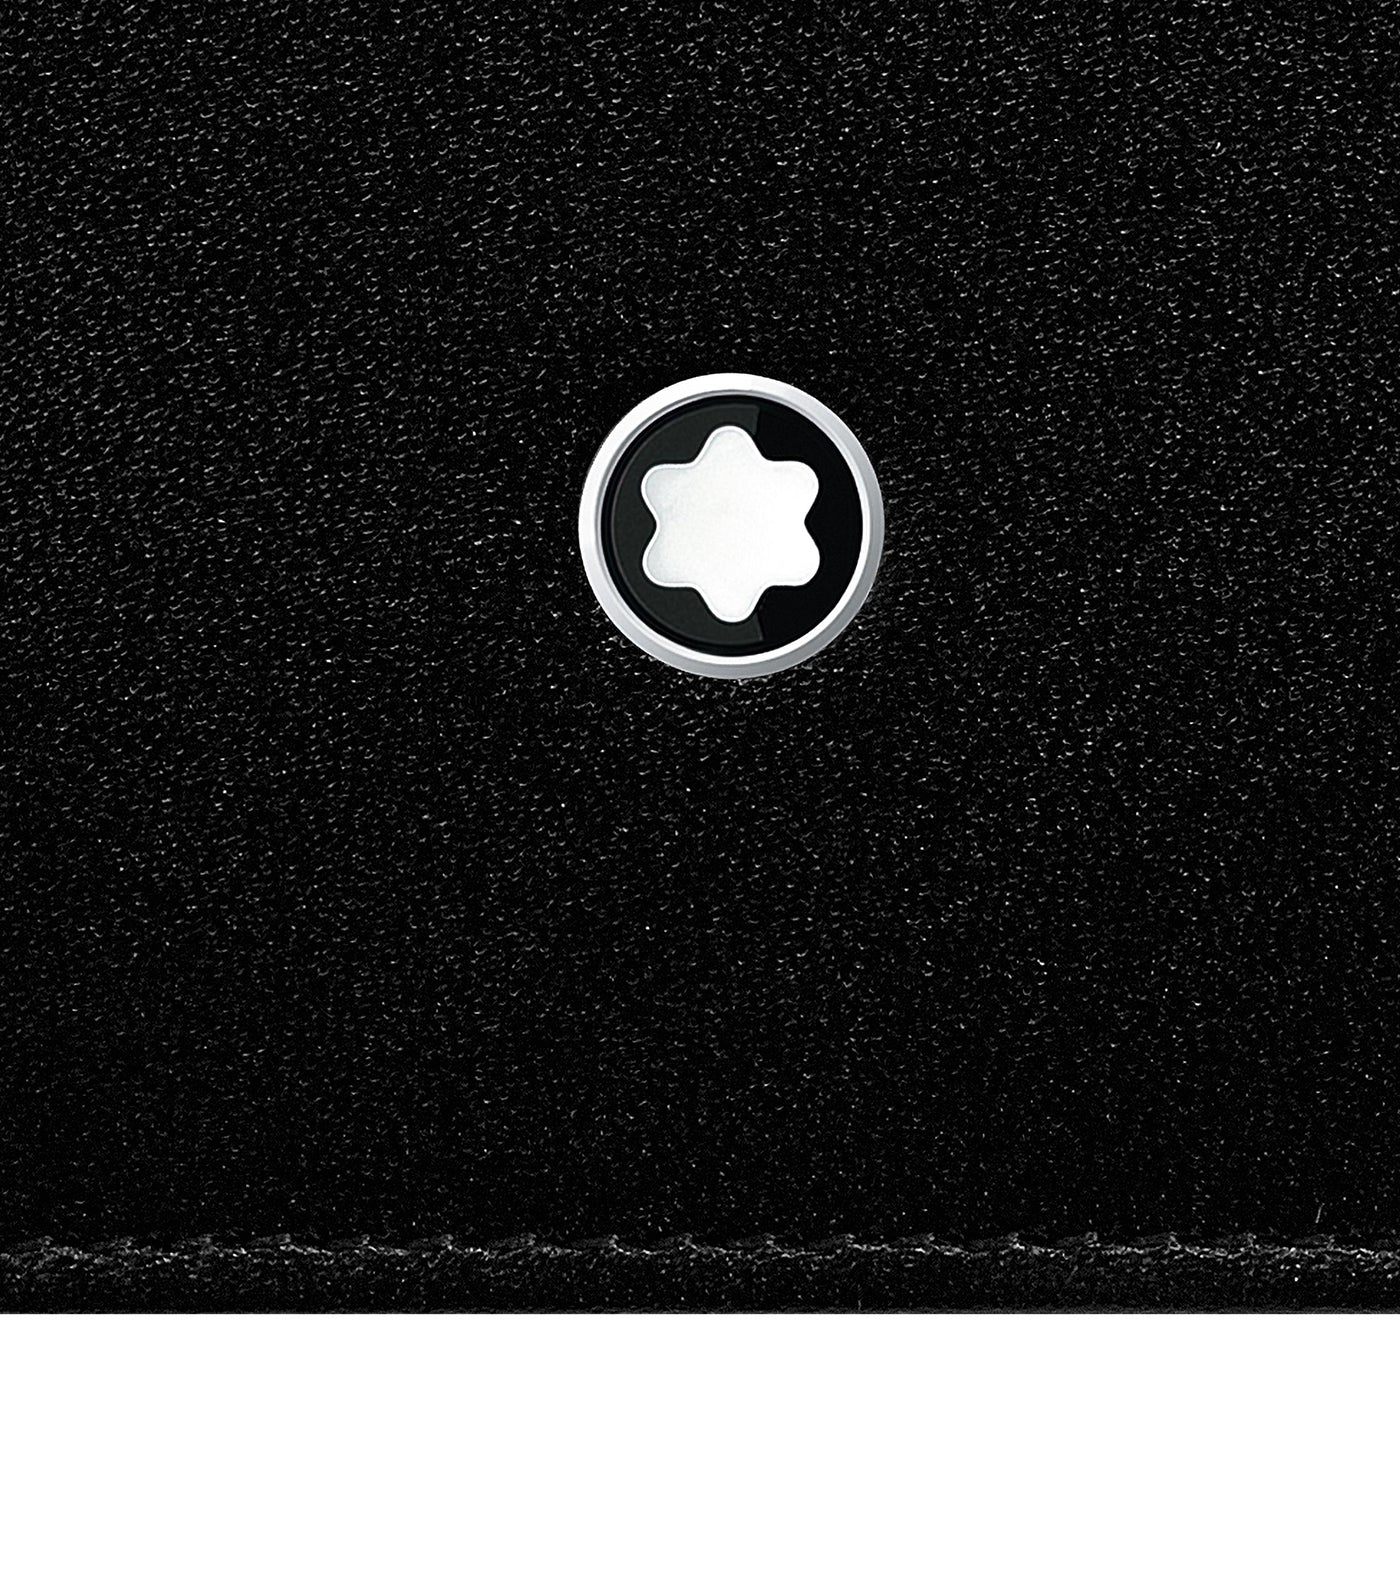 Men wallet Montblanc 130925 Meisterstück 4810 6cc with money clip black  leather